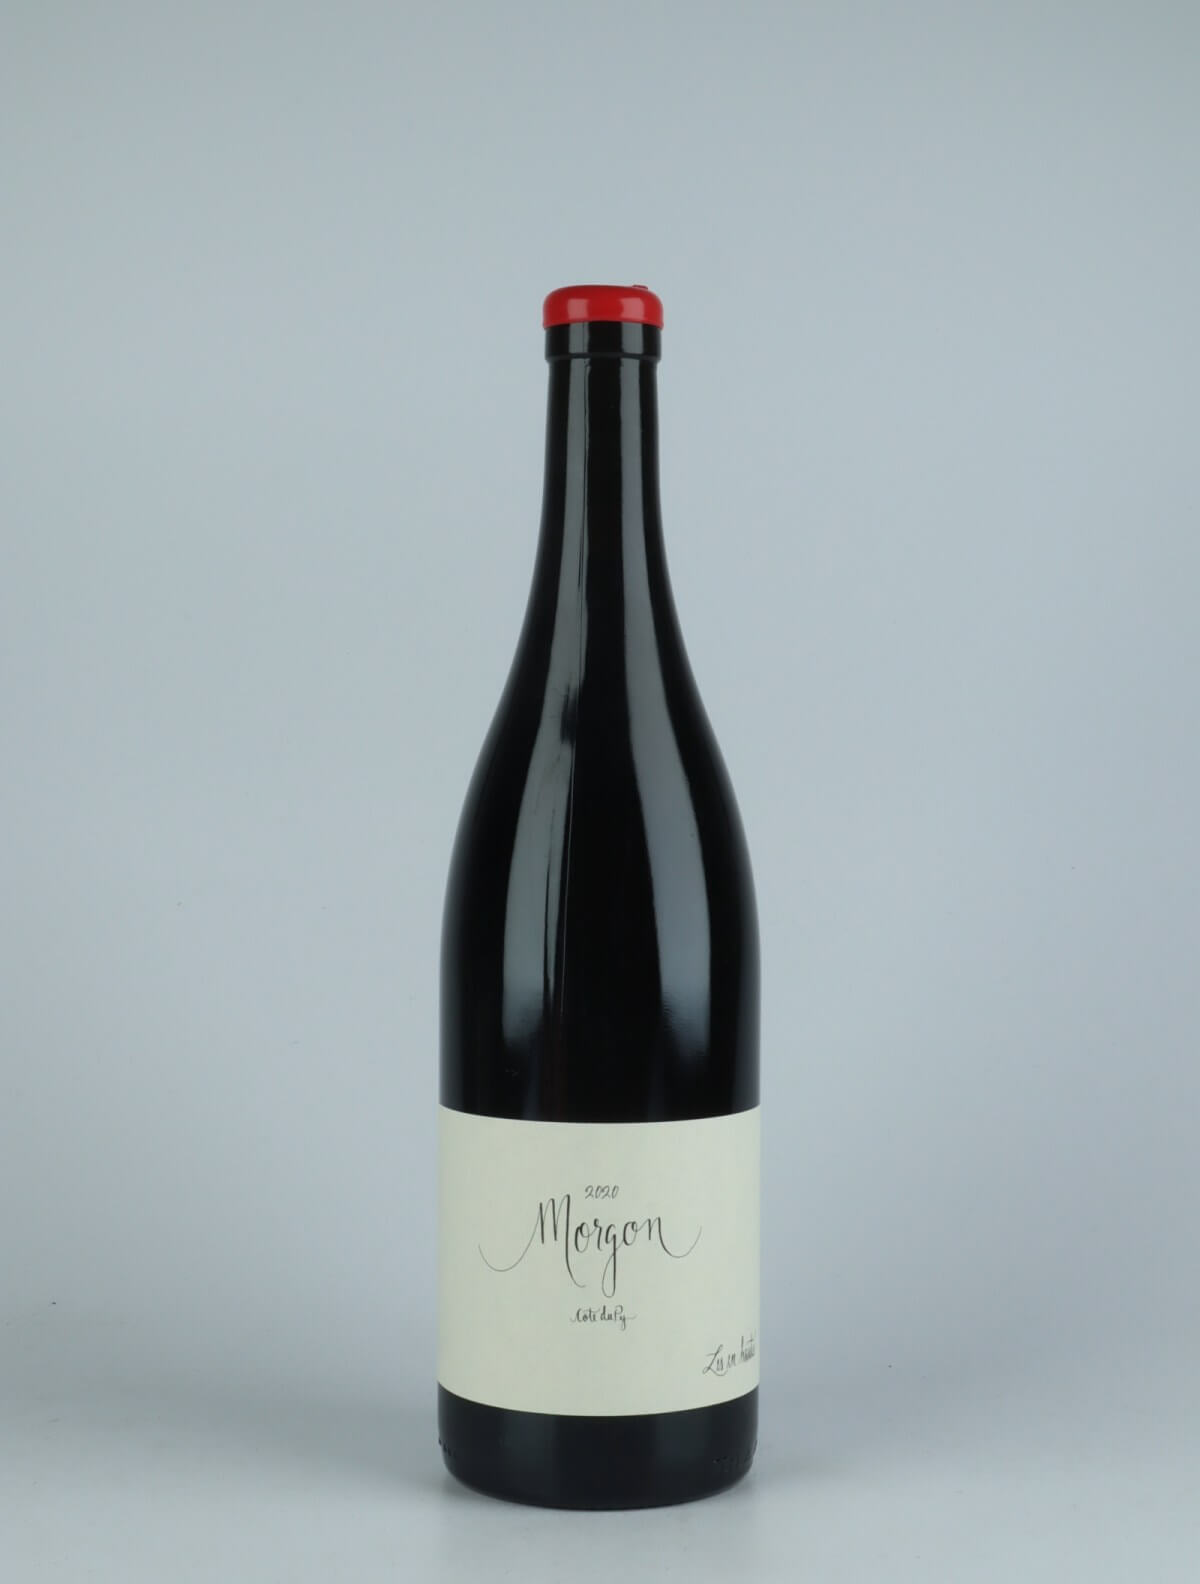 A bottle 2020 Morgon - Côte du Py Red wine from Les En Hauts, Beaujolais in France